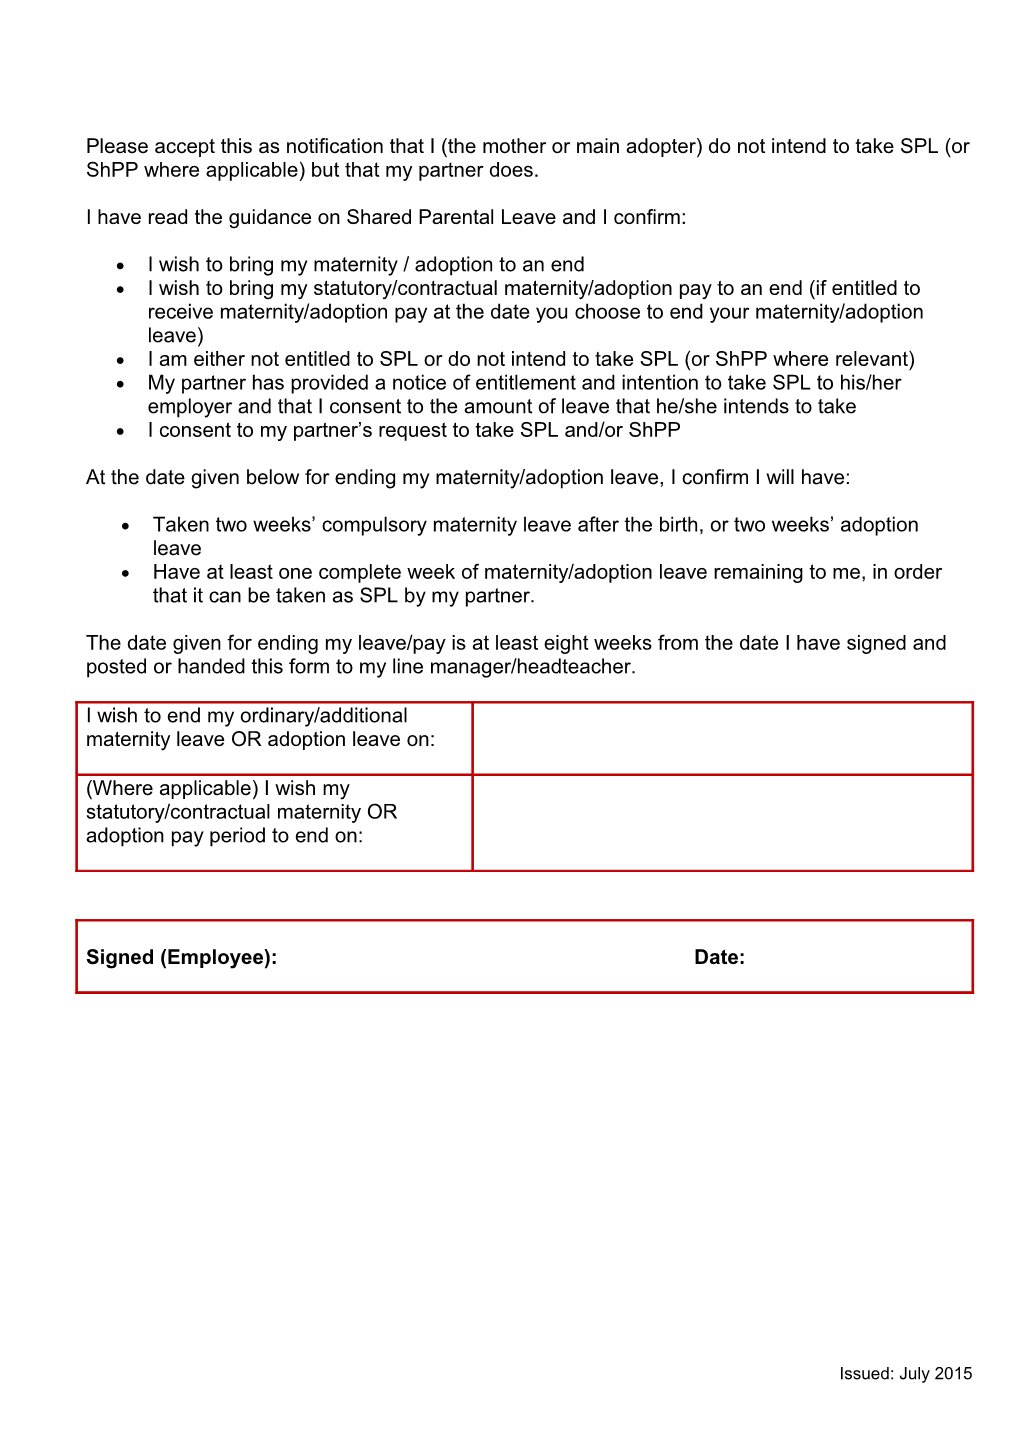 Curtailment Notice Formfor Shared Parental Leave (SPL)